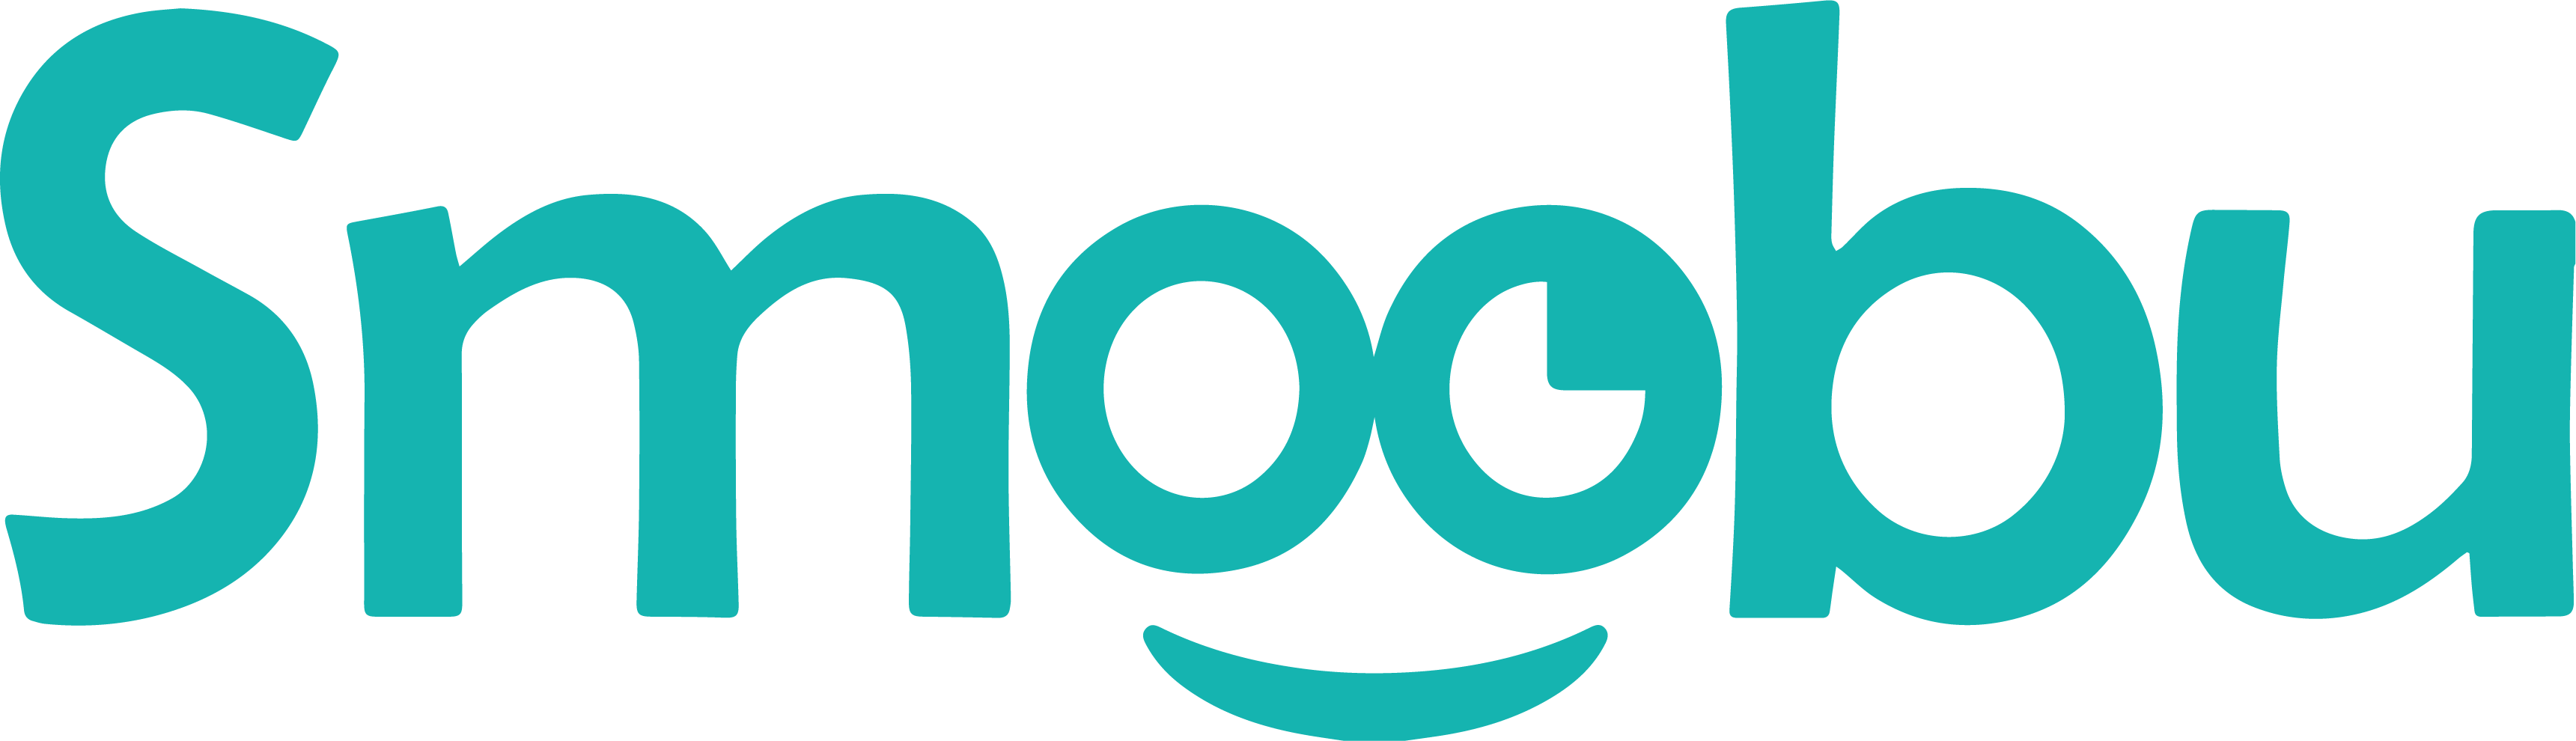 Logotipo de Smoobu